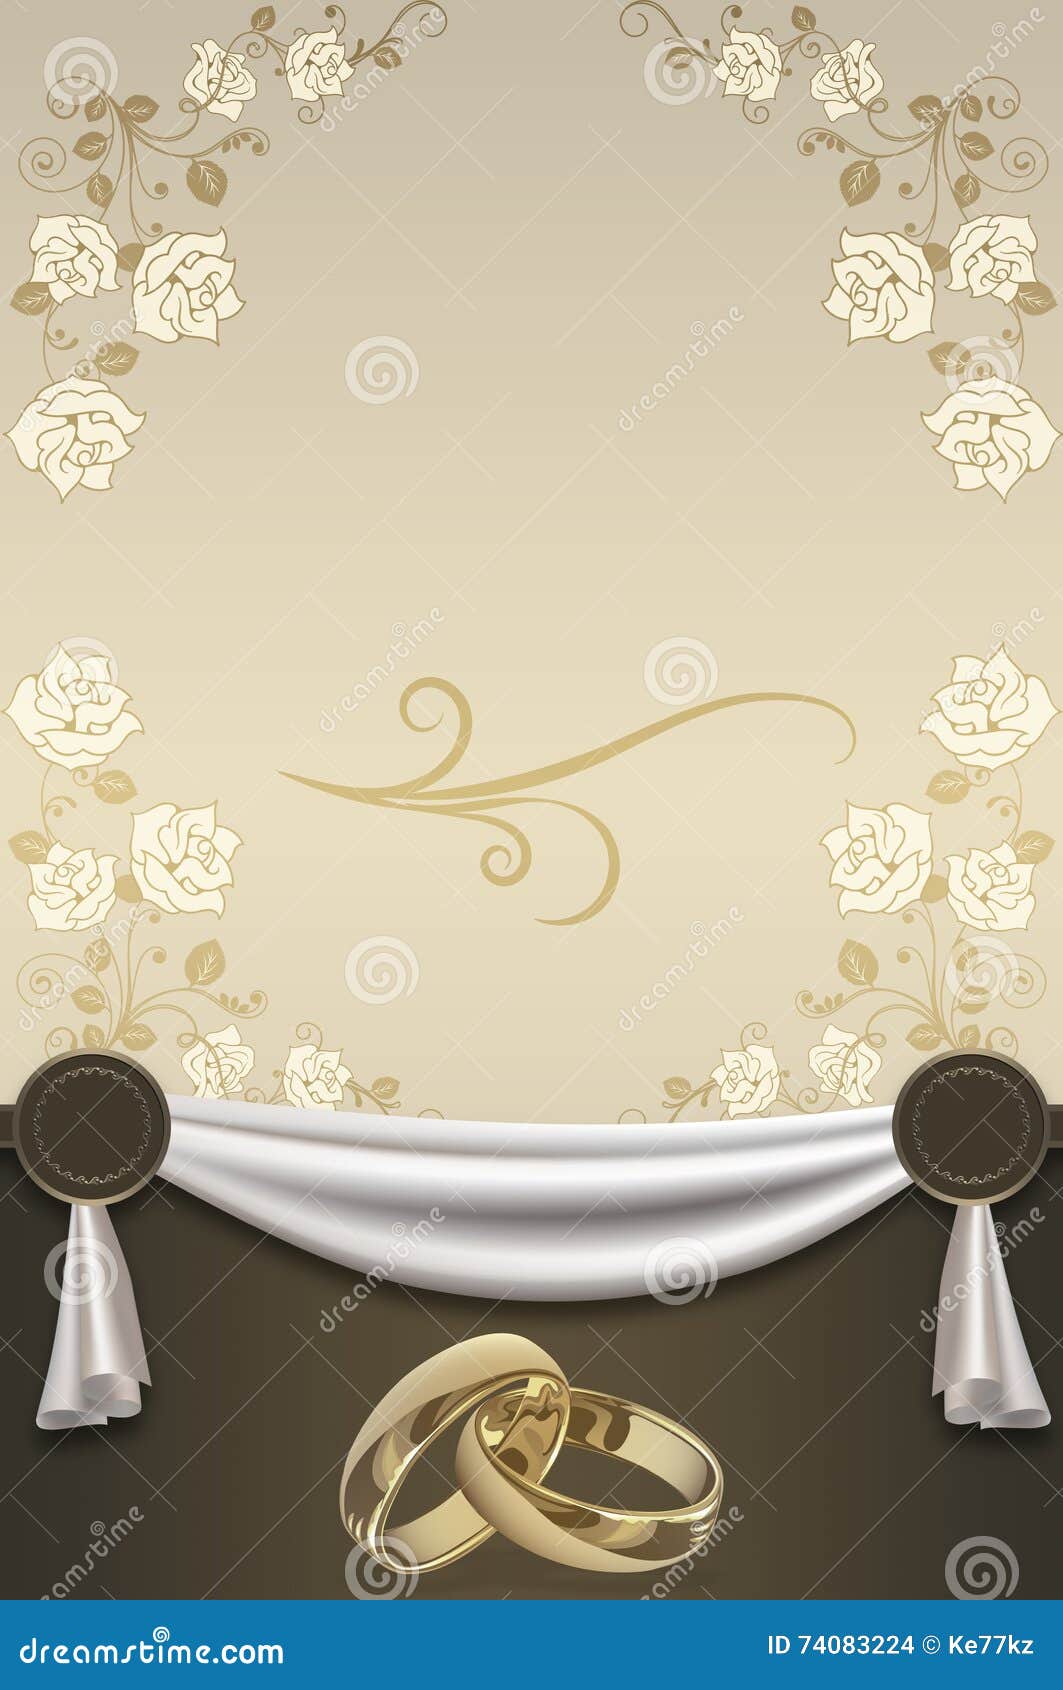 Wedding Invitation Card Design. Stock Illustration - Illustration of  background, flowers: 74083224